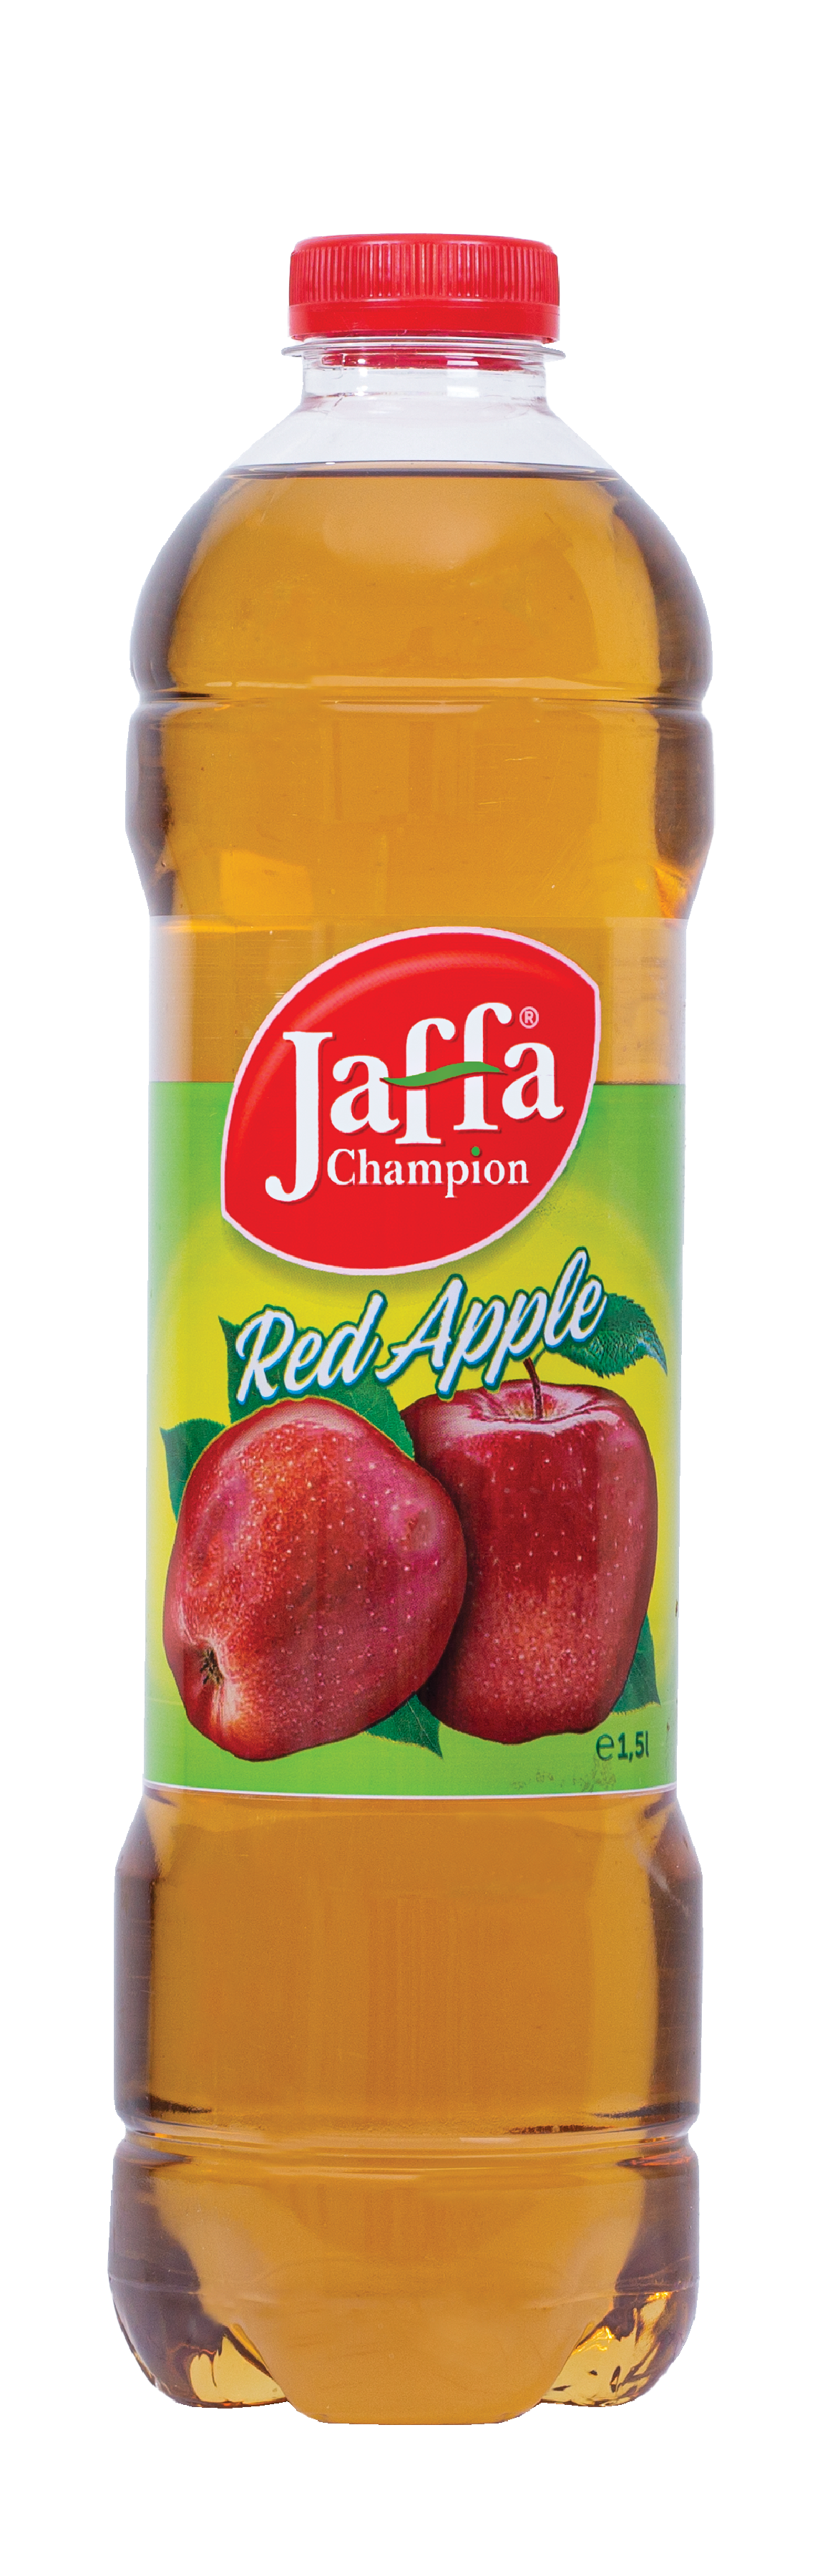 Jaffa Champion Apfelsaft rot 1,5 liter